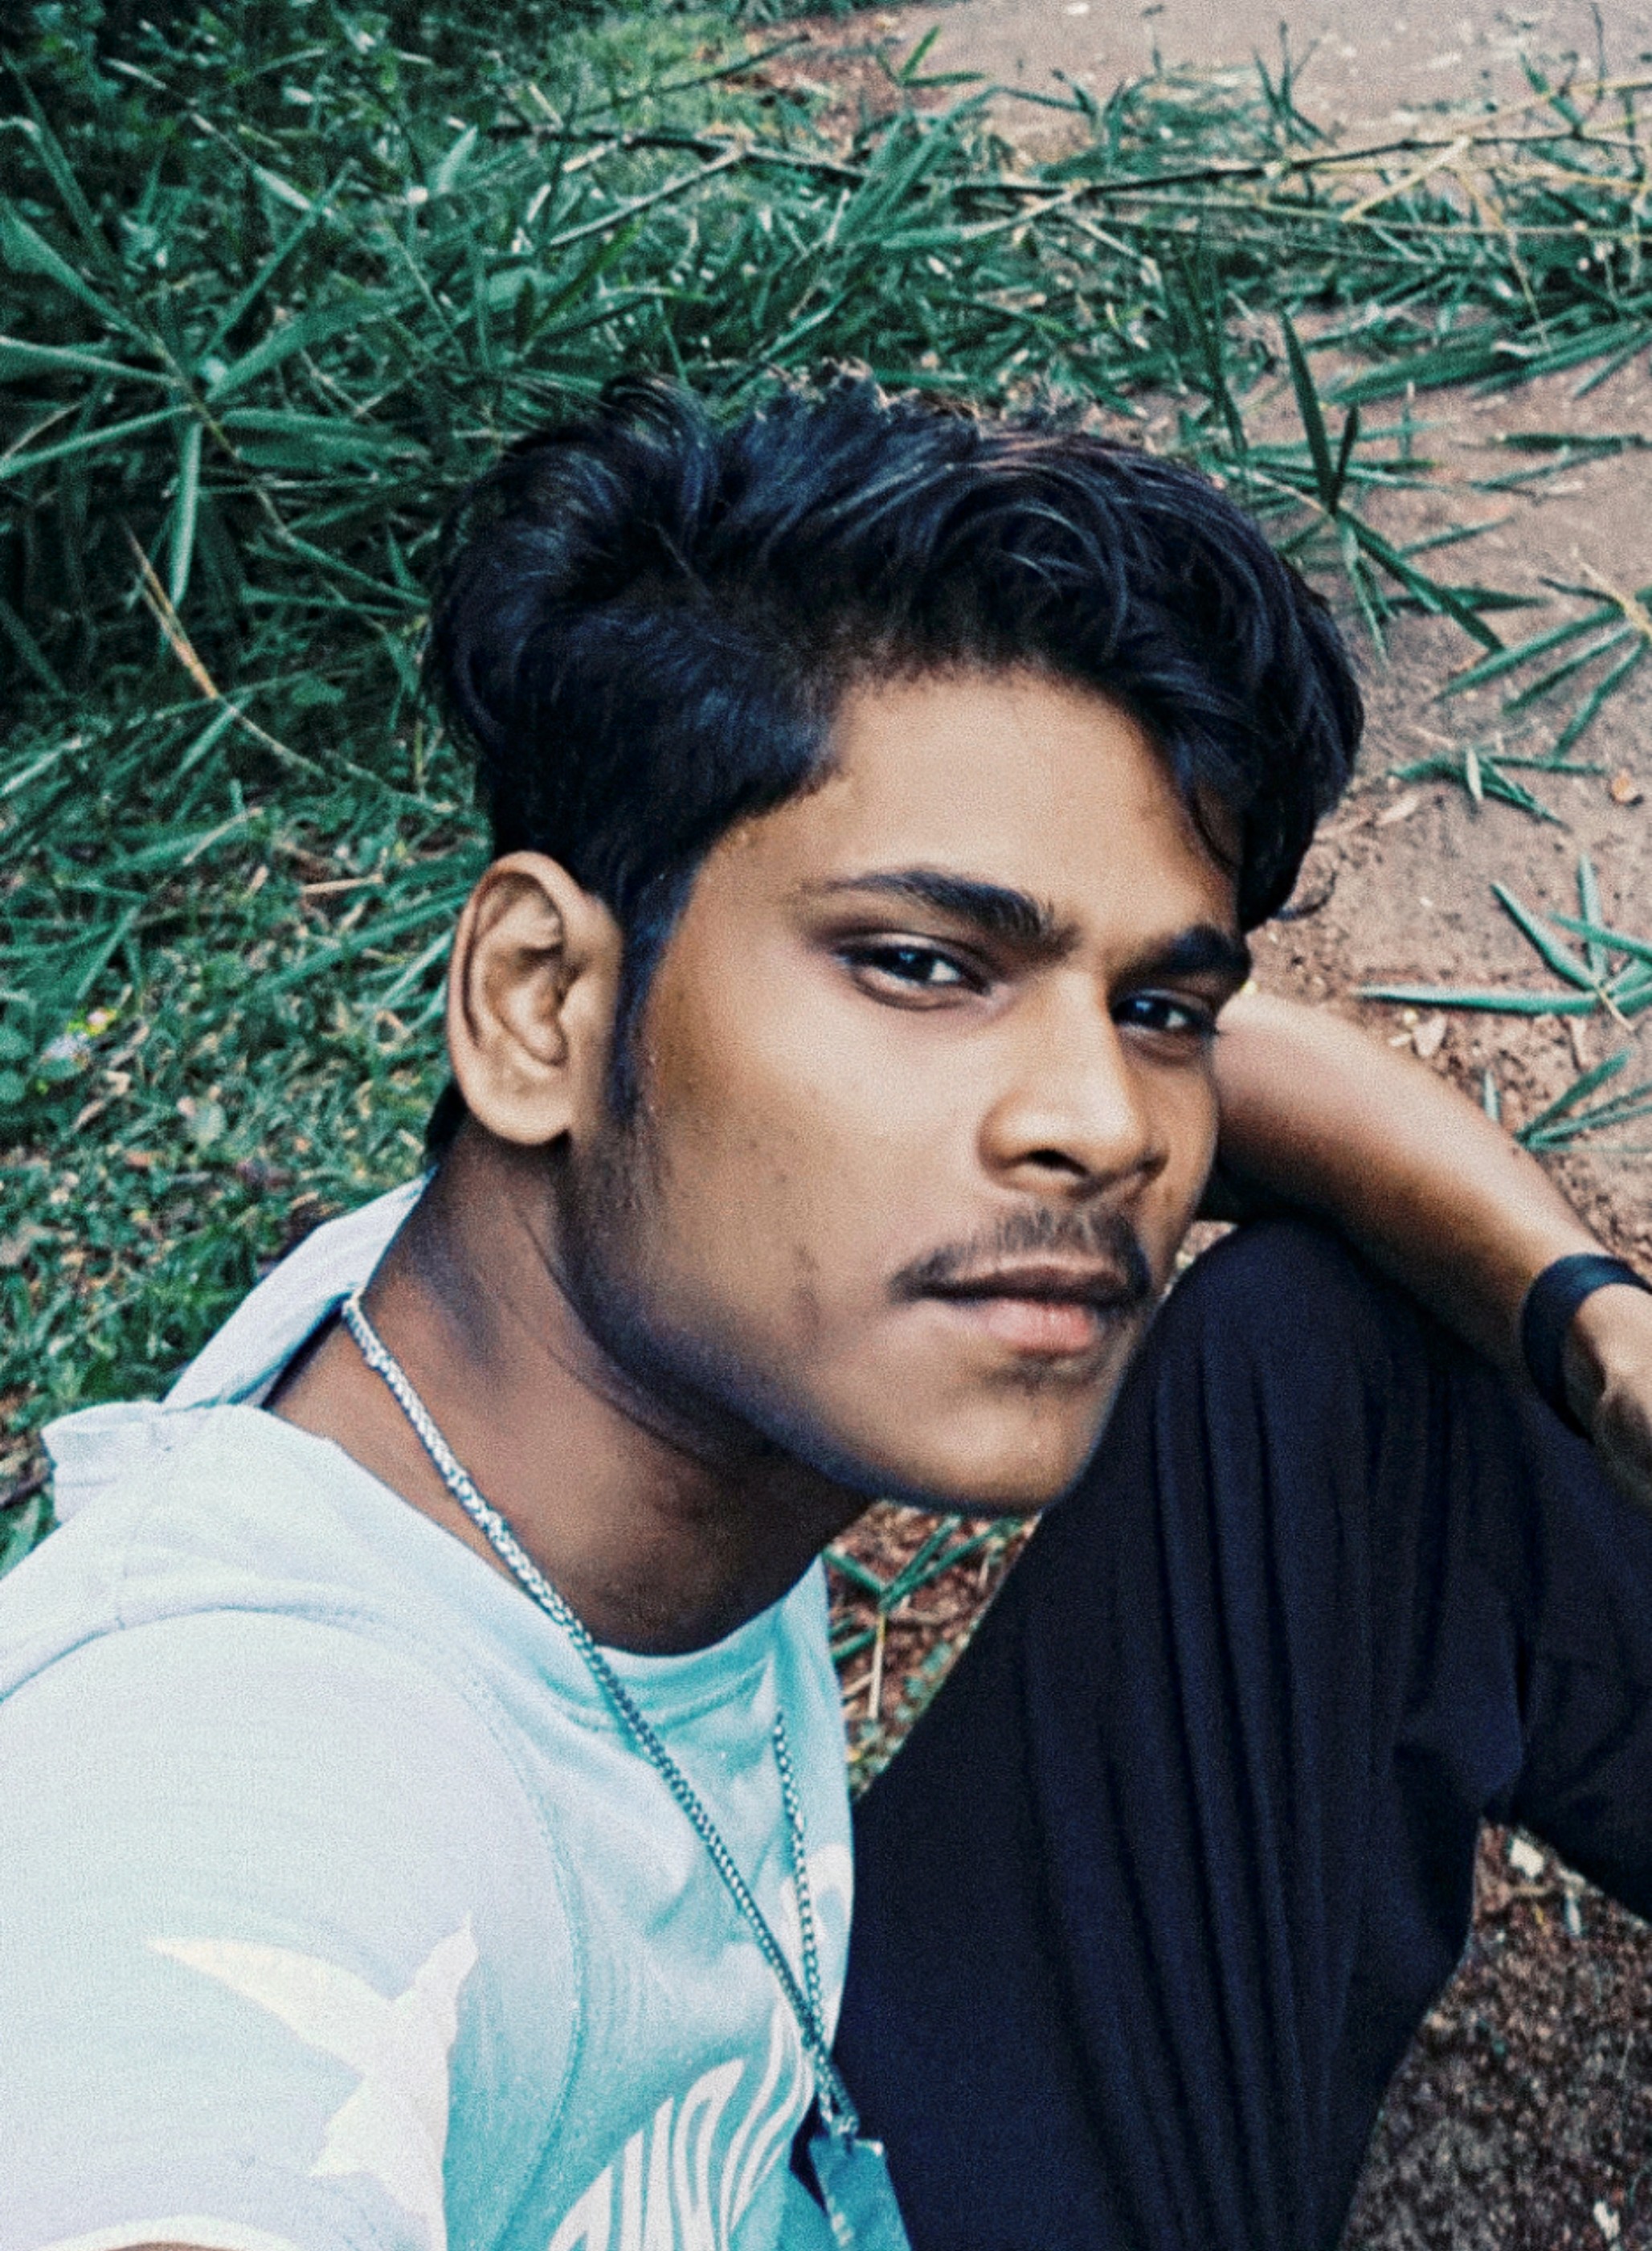 Mangu Kumar Sahoo Selfie Arisalpatana.jpeg